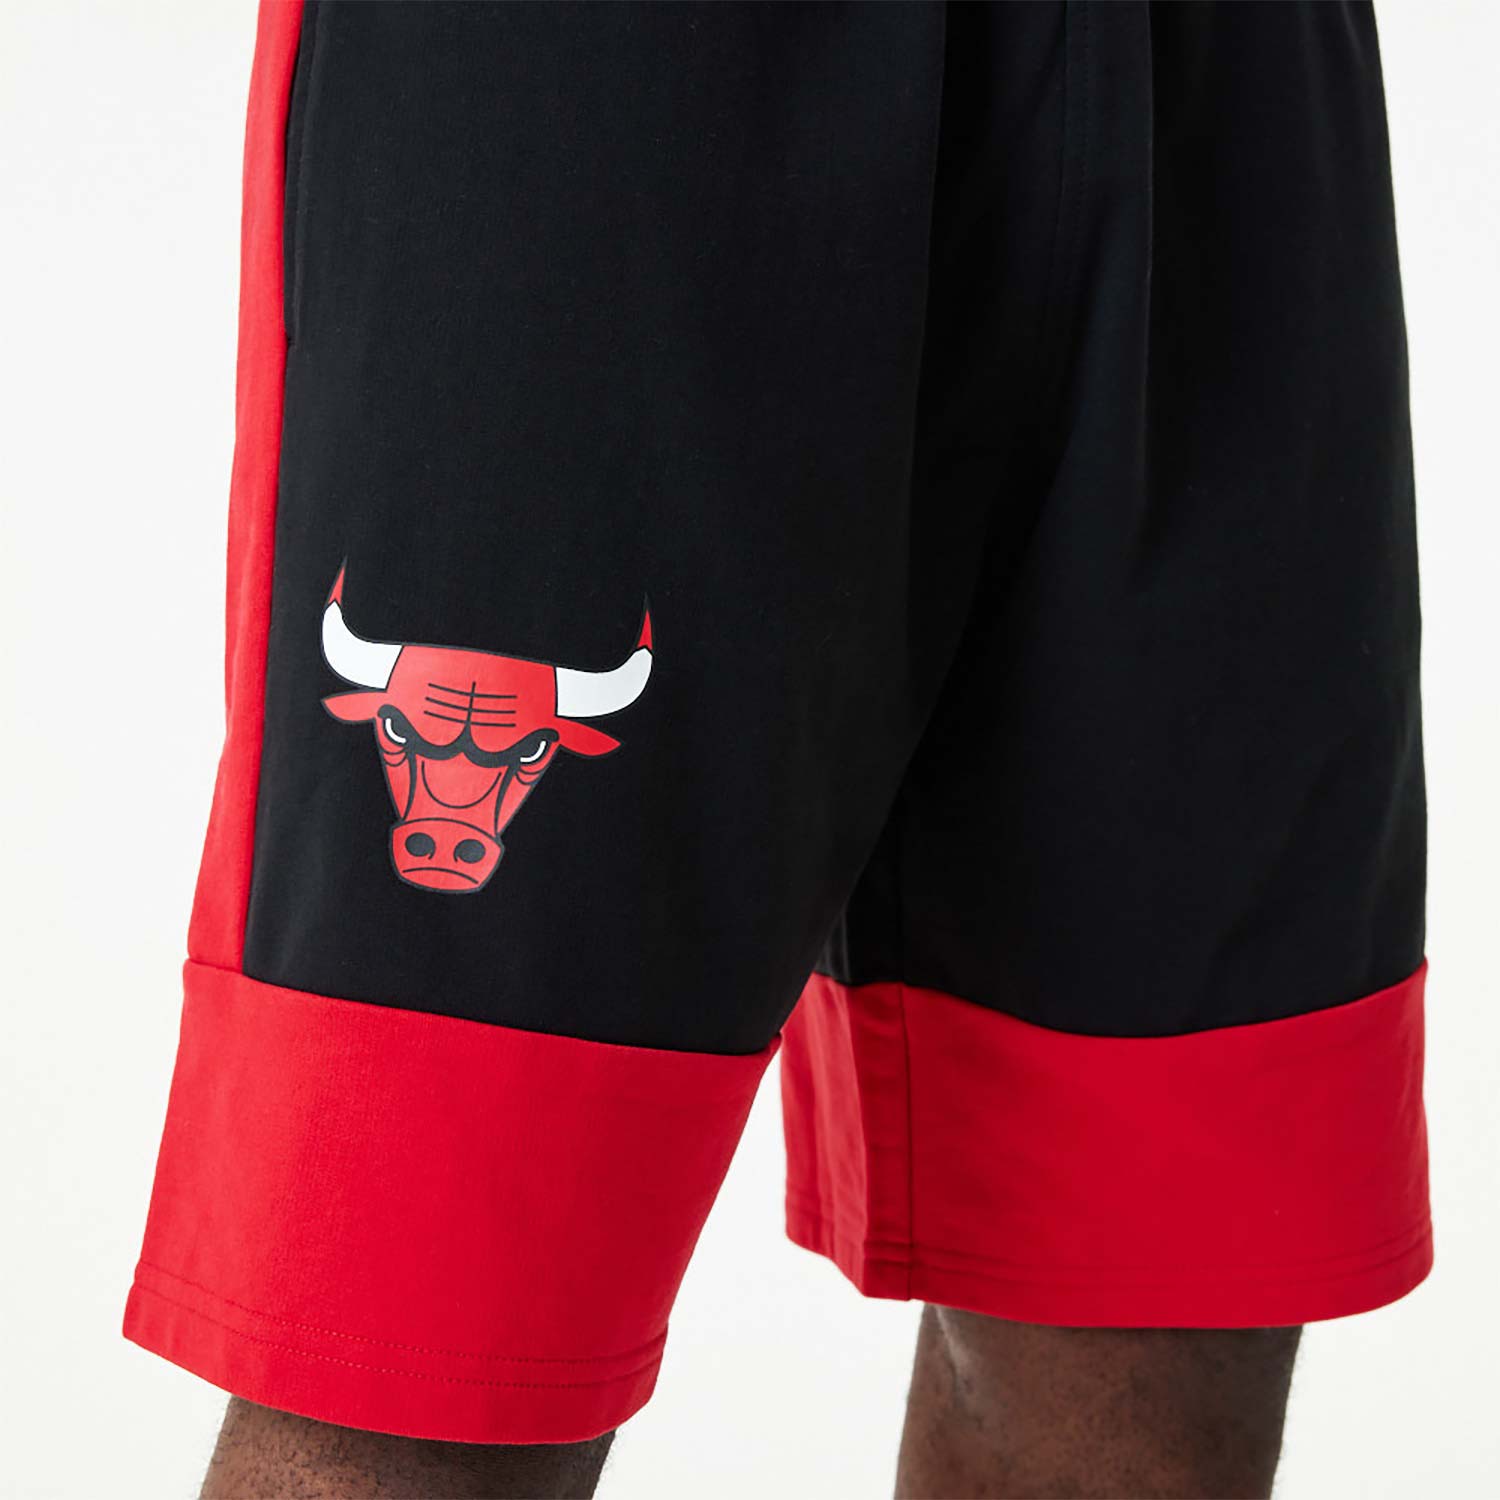 Chicago Bulls Shorts | New Era Cap Republic of Ireland